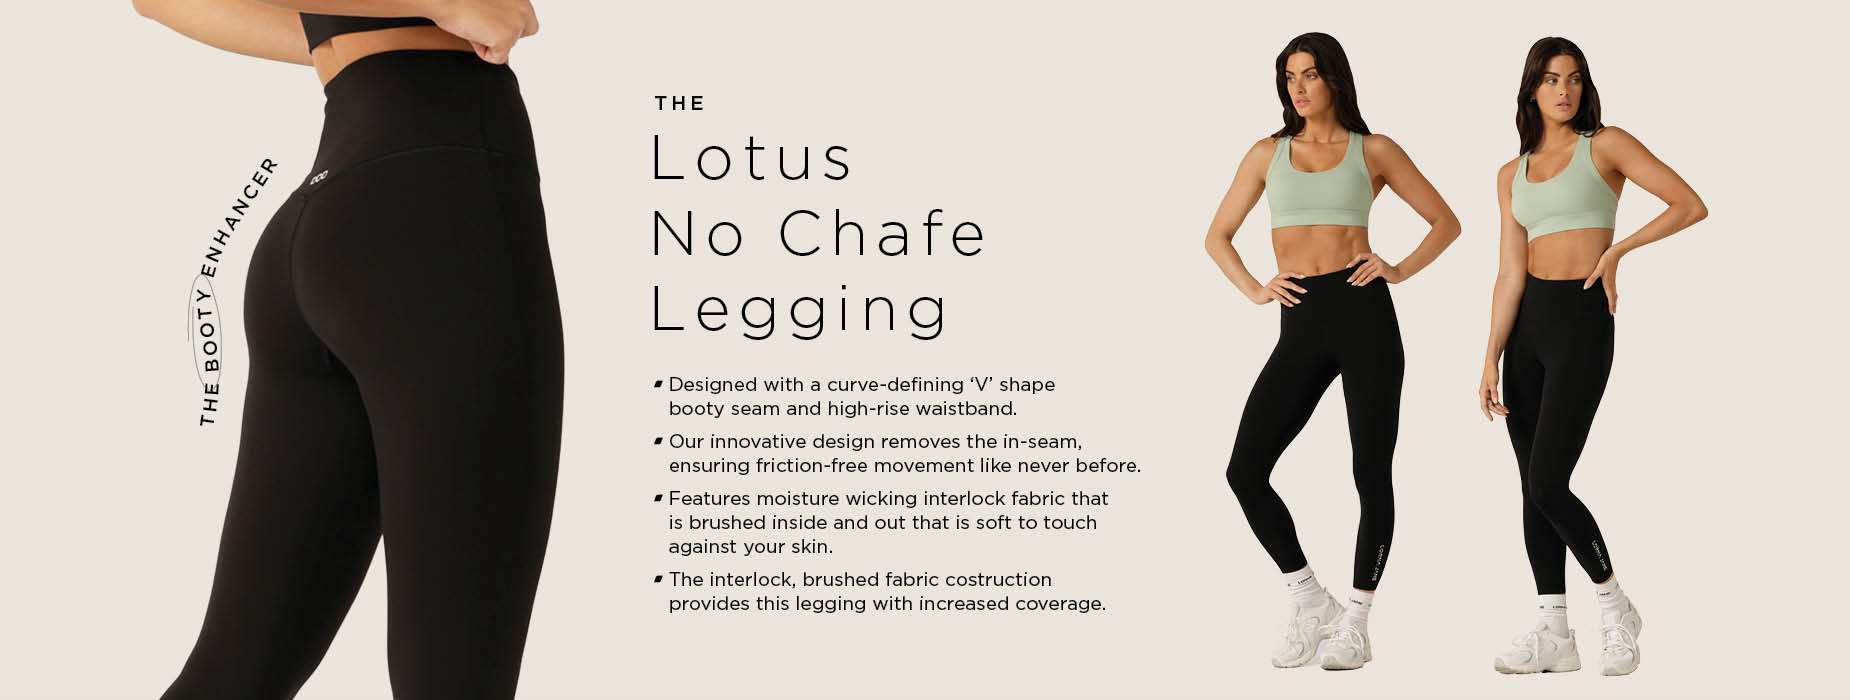 Lotus Collection  Lorna Jane Activewear